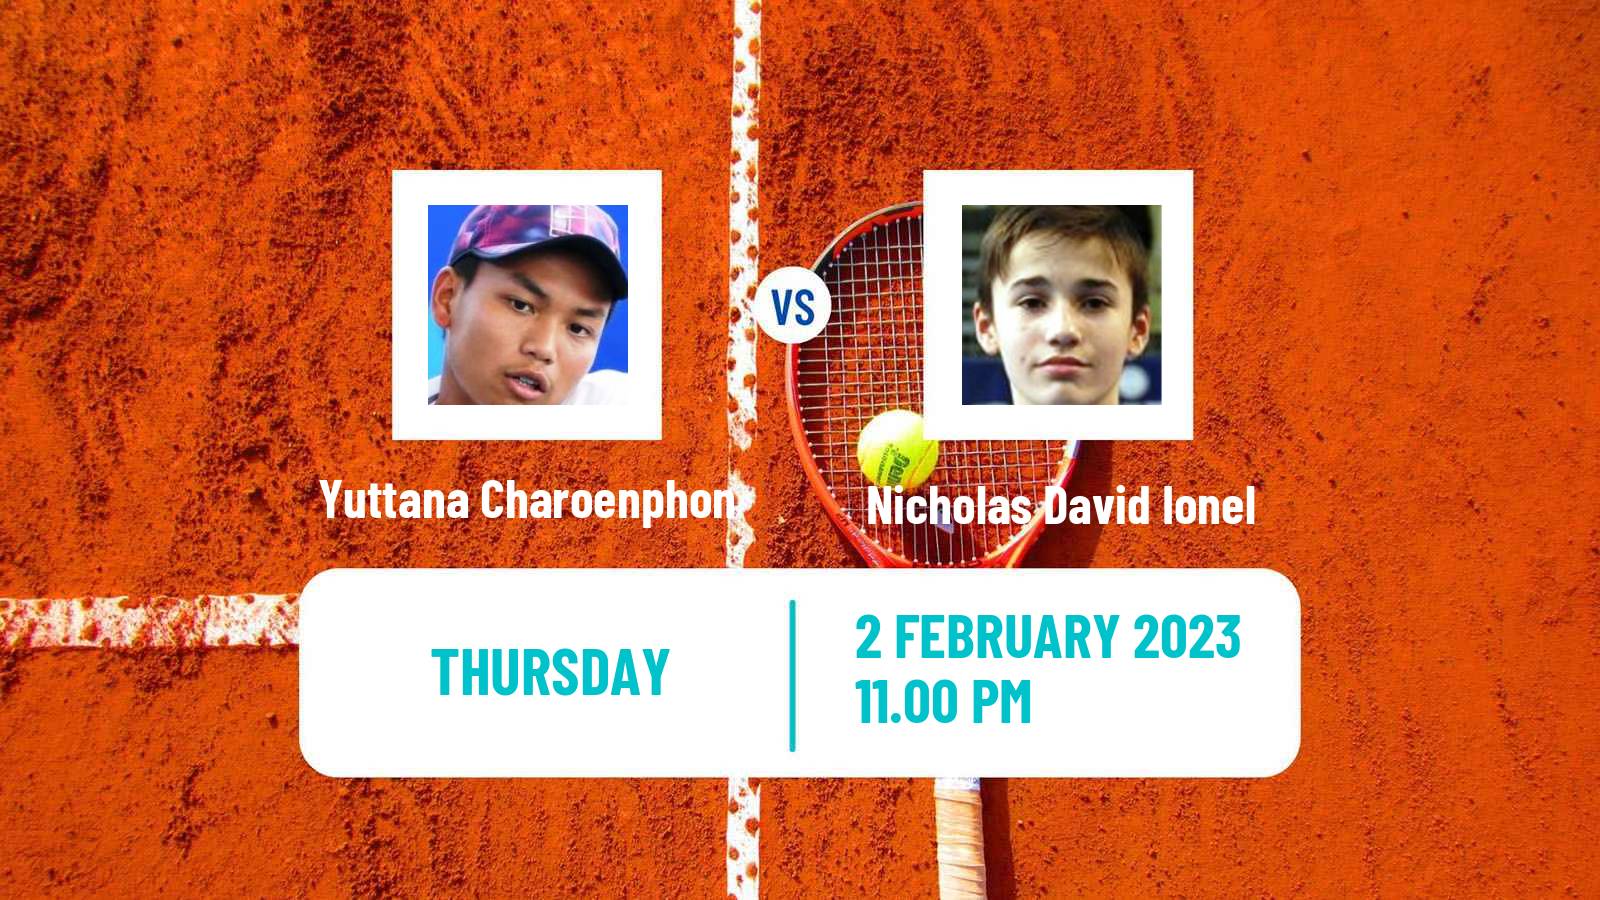 Tennis Davis Cup World Group I Yuttana Charoenphon - Nicholas David Ionel